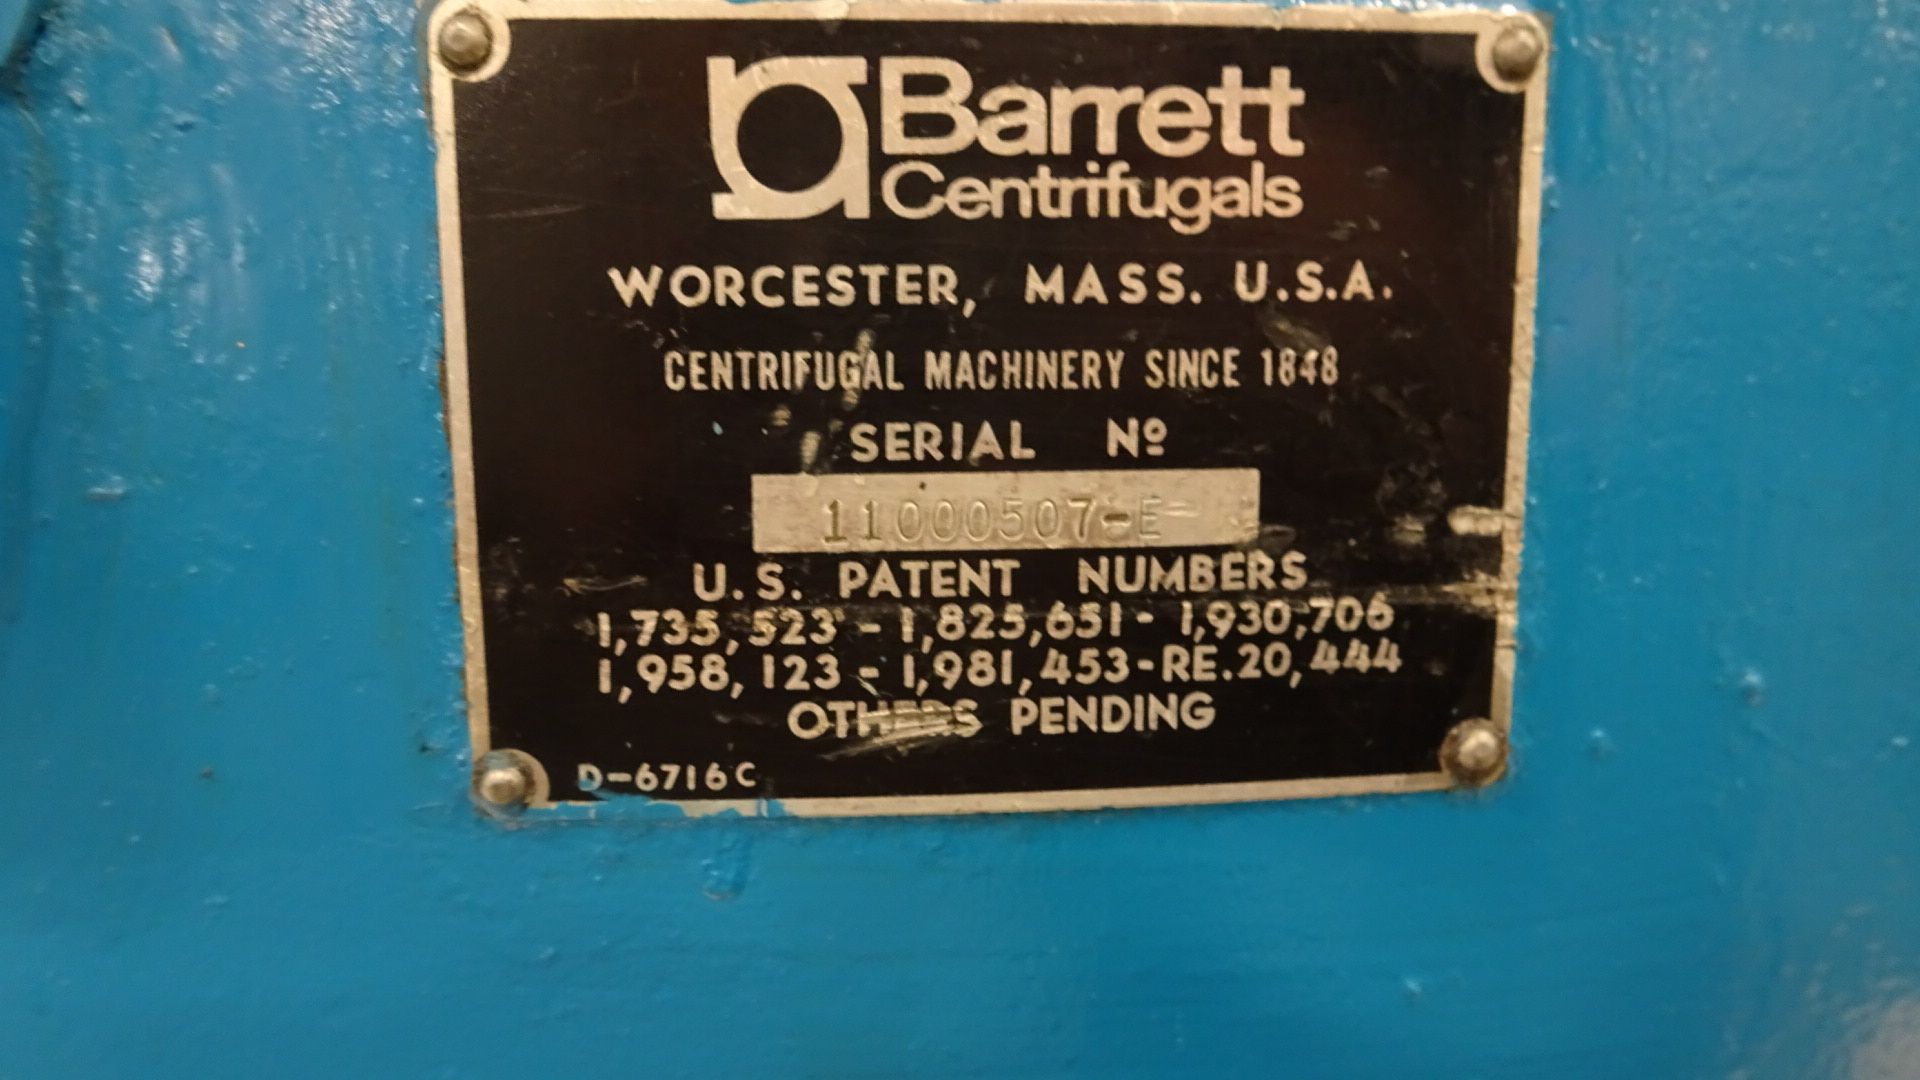 Barrett Model 1100 Centrifugal Chip Spinner, sn:11000507-E (*See Photos) - Image 4 of 4